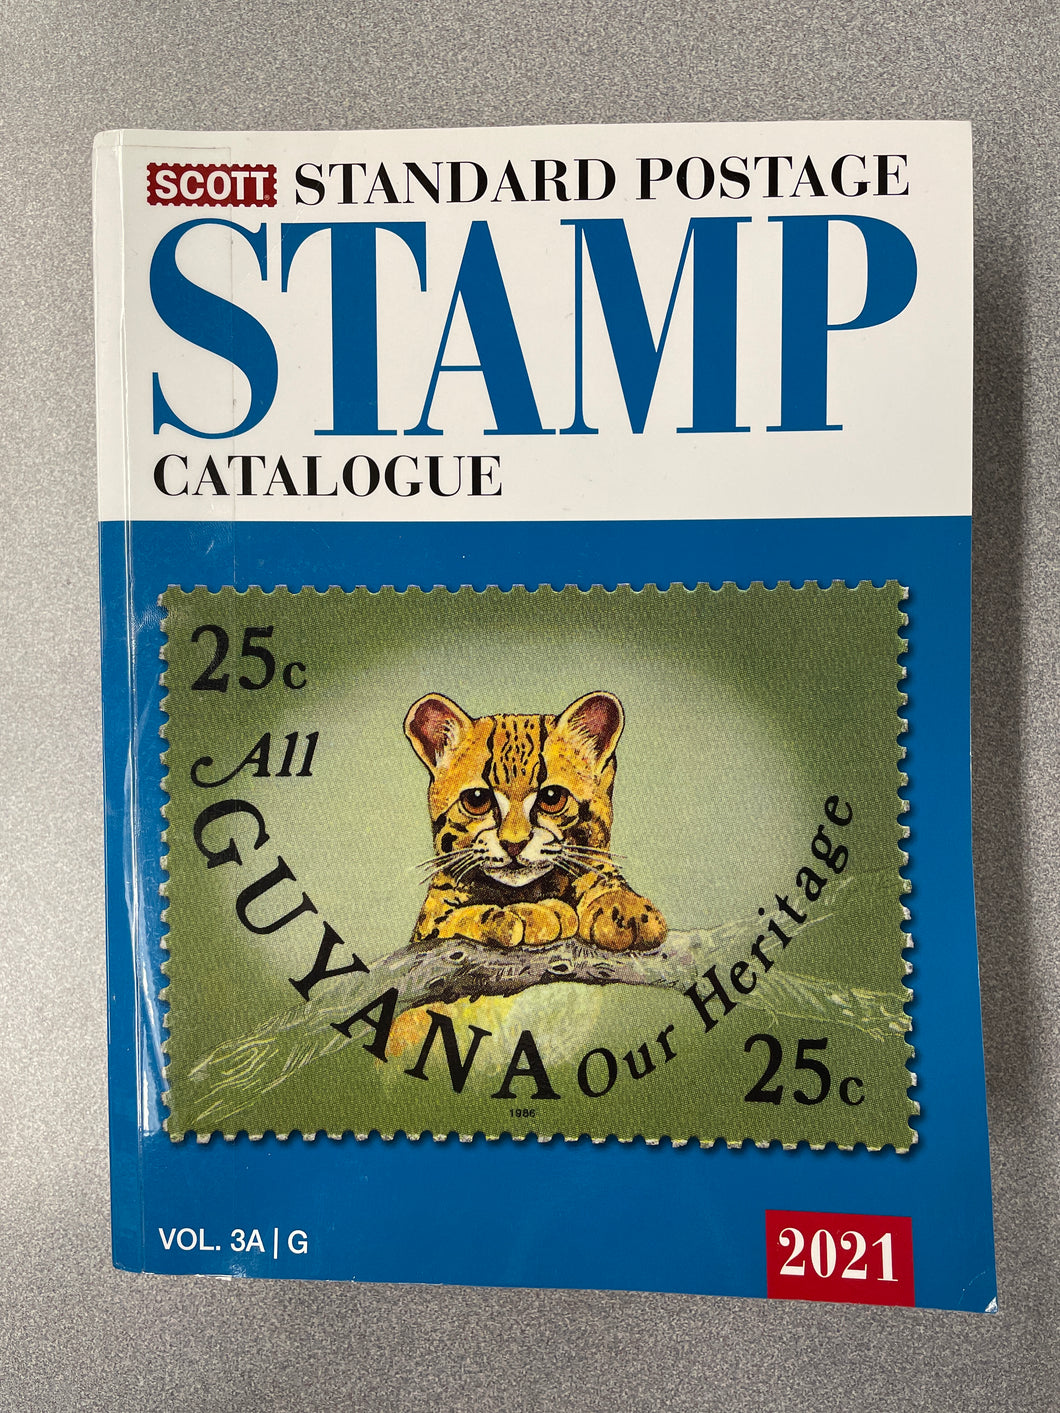 CG  Scott Standard Postage Stamp Catalogue, Vol. 3A and Vol. 3B, 2021, Bigalke, Jay, ed [2020] N 3/24